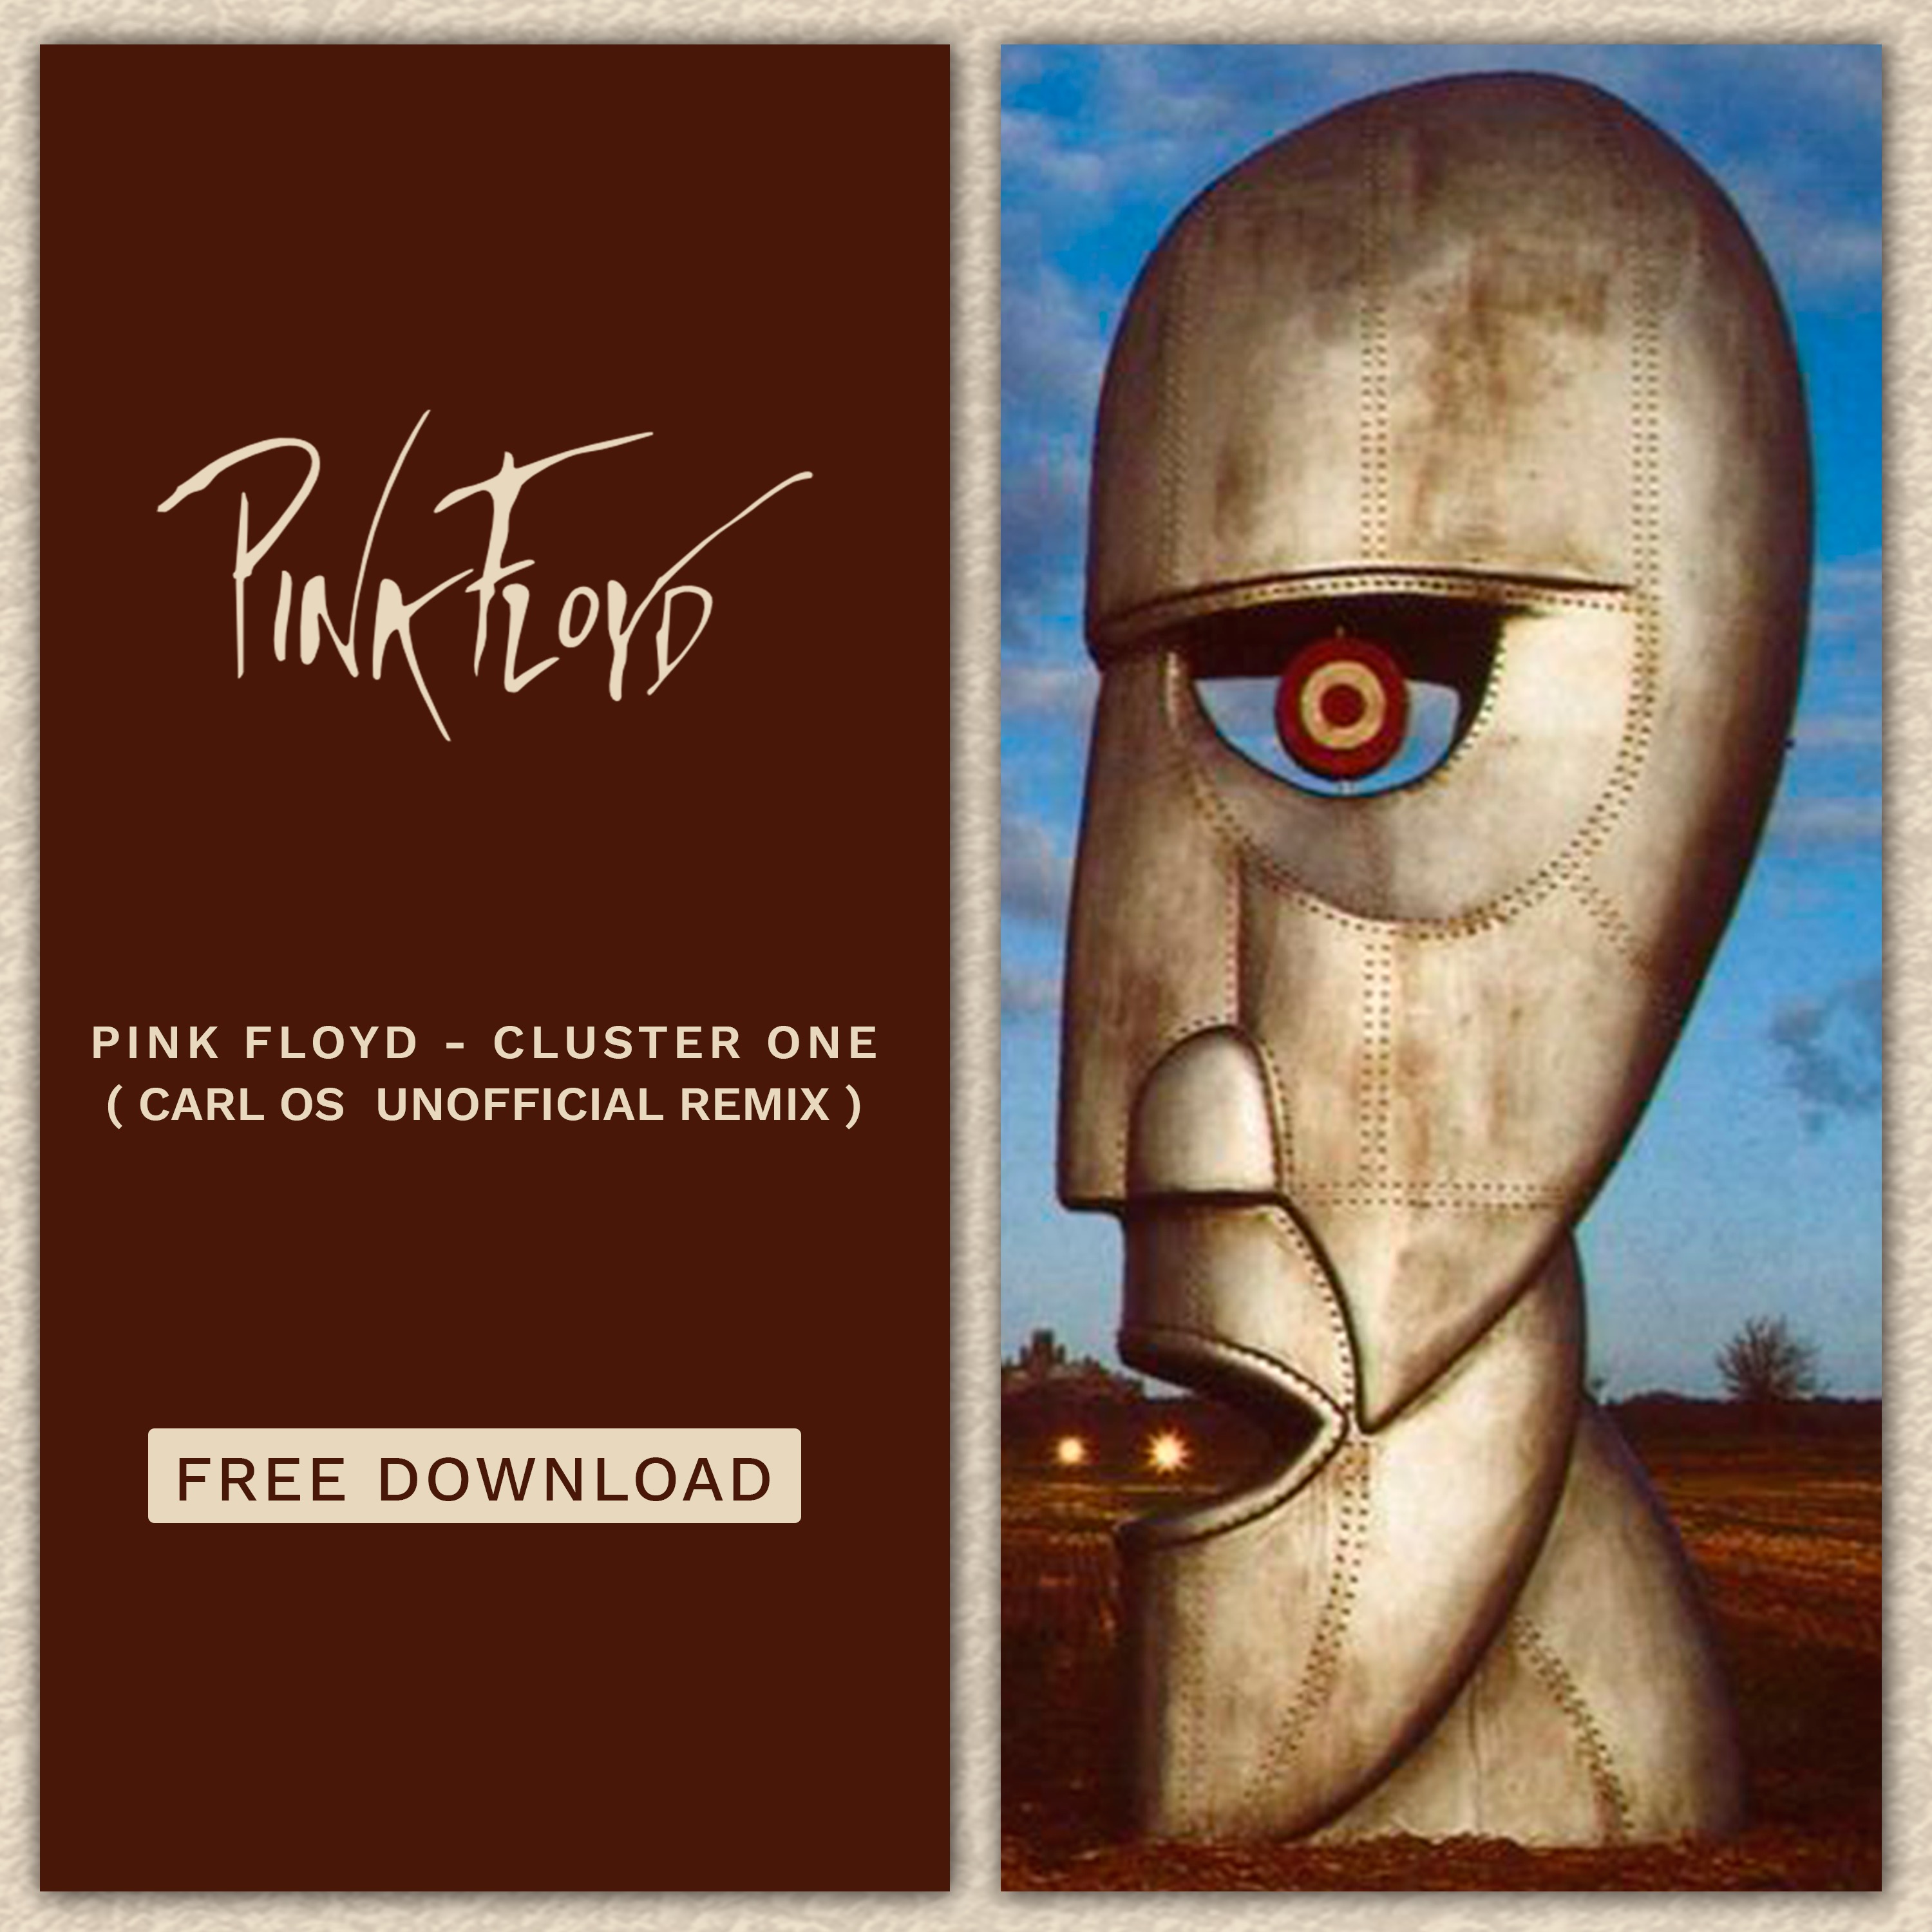 Atsisiųsti! FREE DOWNLOAD: Pink Floyd - Cluster One (Carl OS Unofficial Remix)